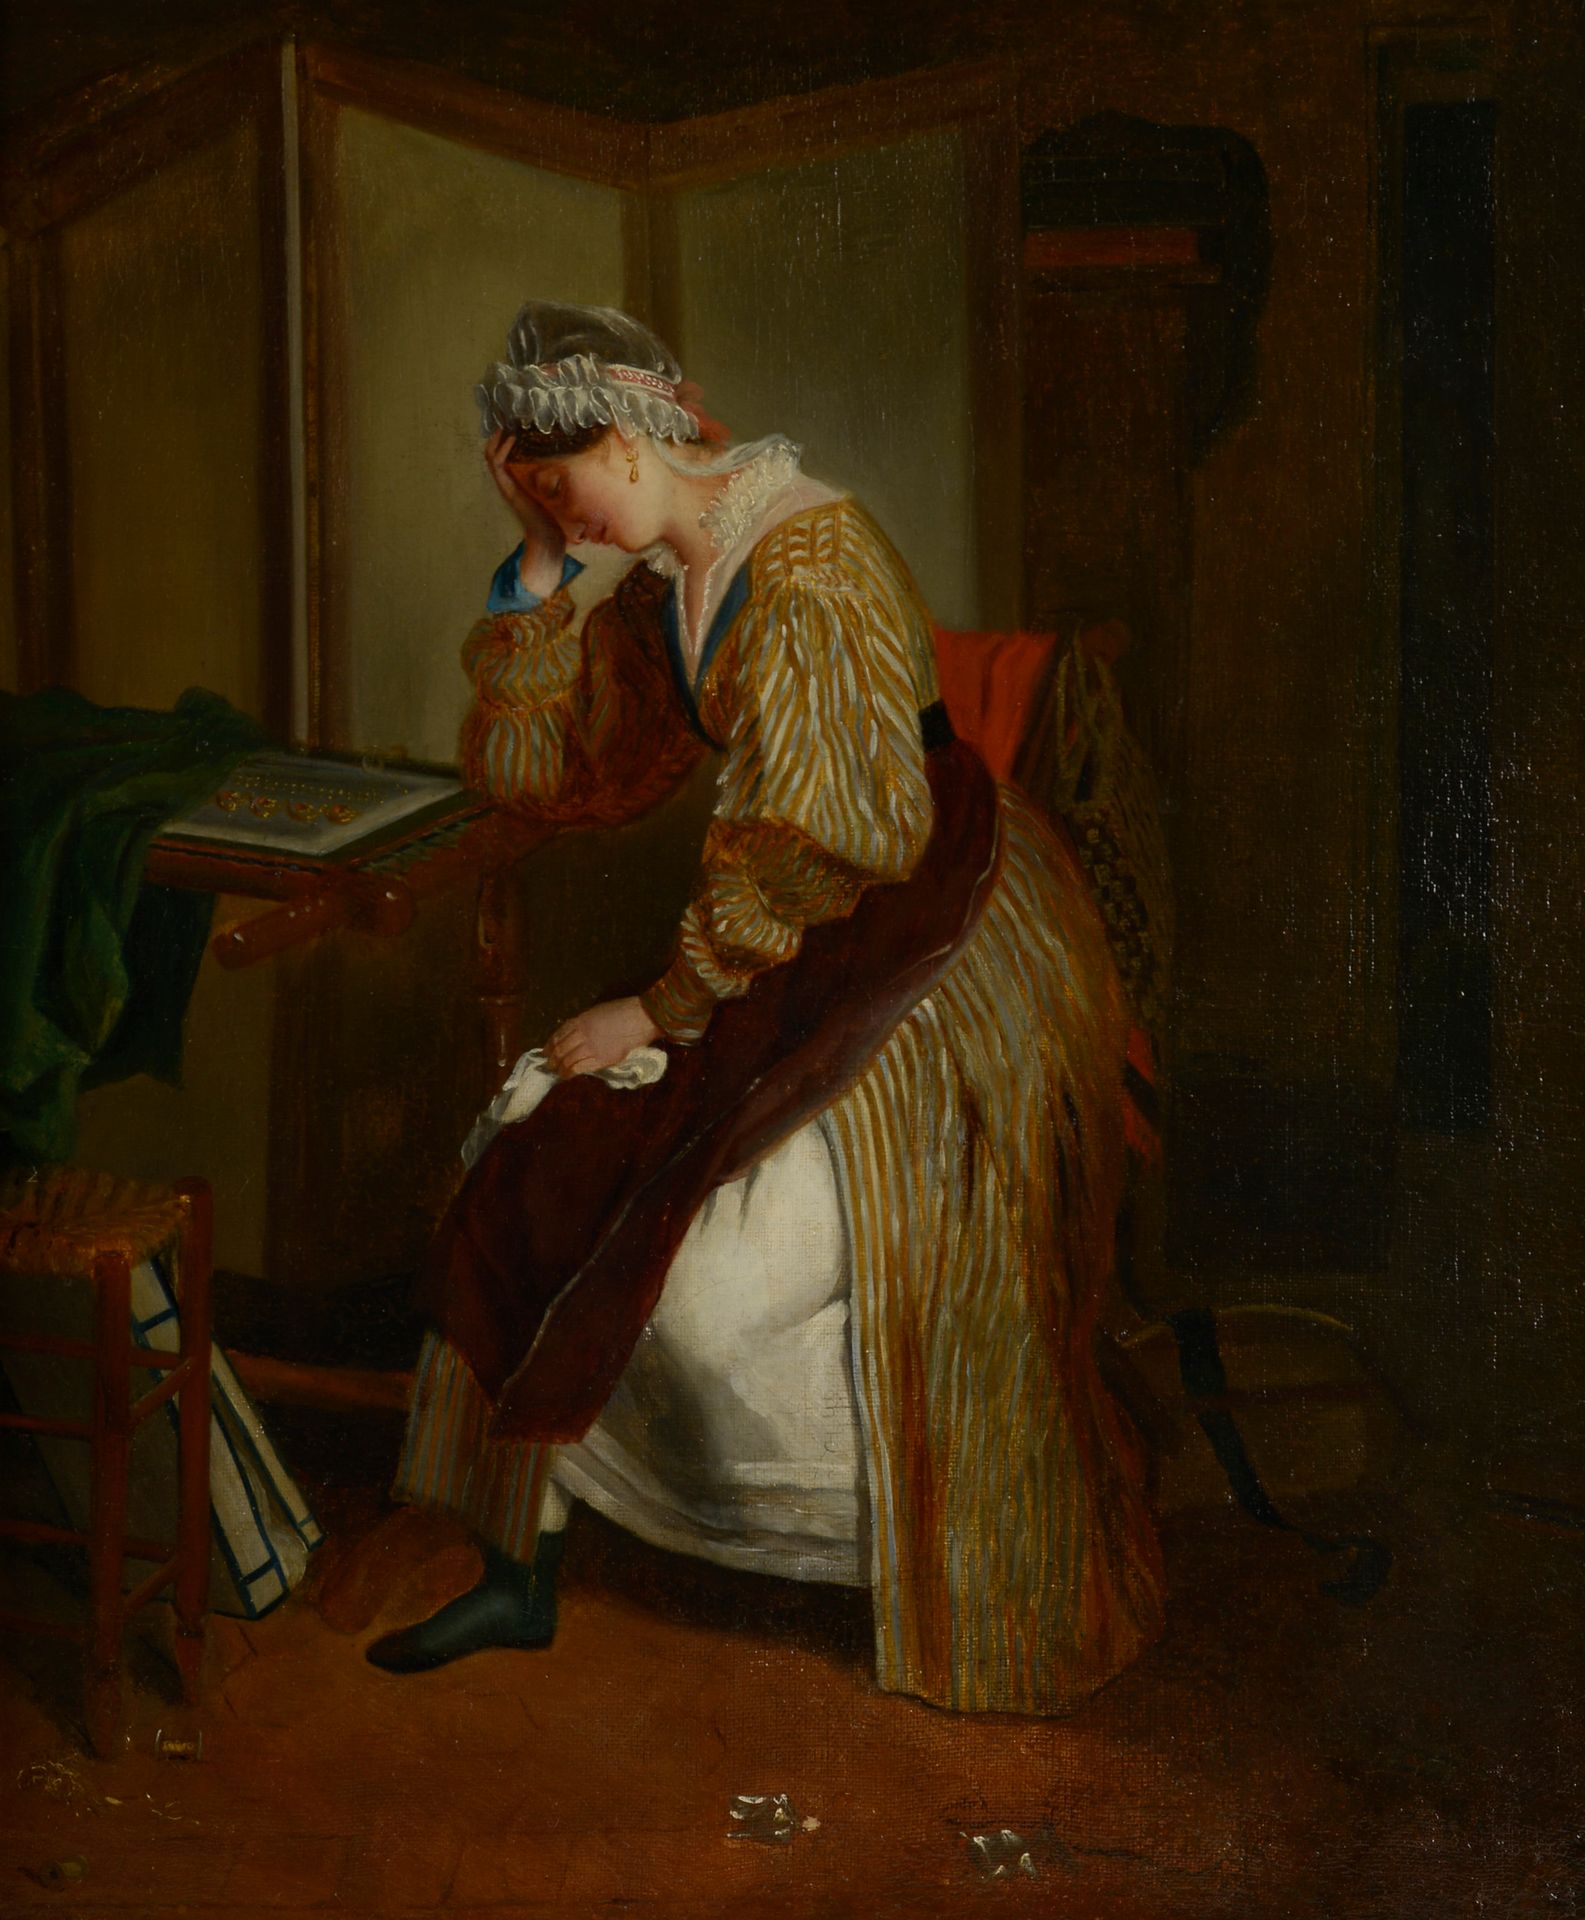 Null 19世纪的法国学校。
坐在织布车间的妇女。
布面油画（衬里）。
高度：54厘米。54 cm - 宽度：46 cm